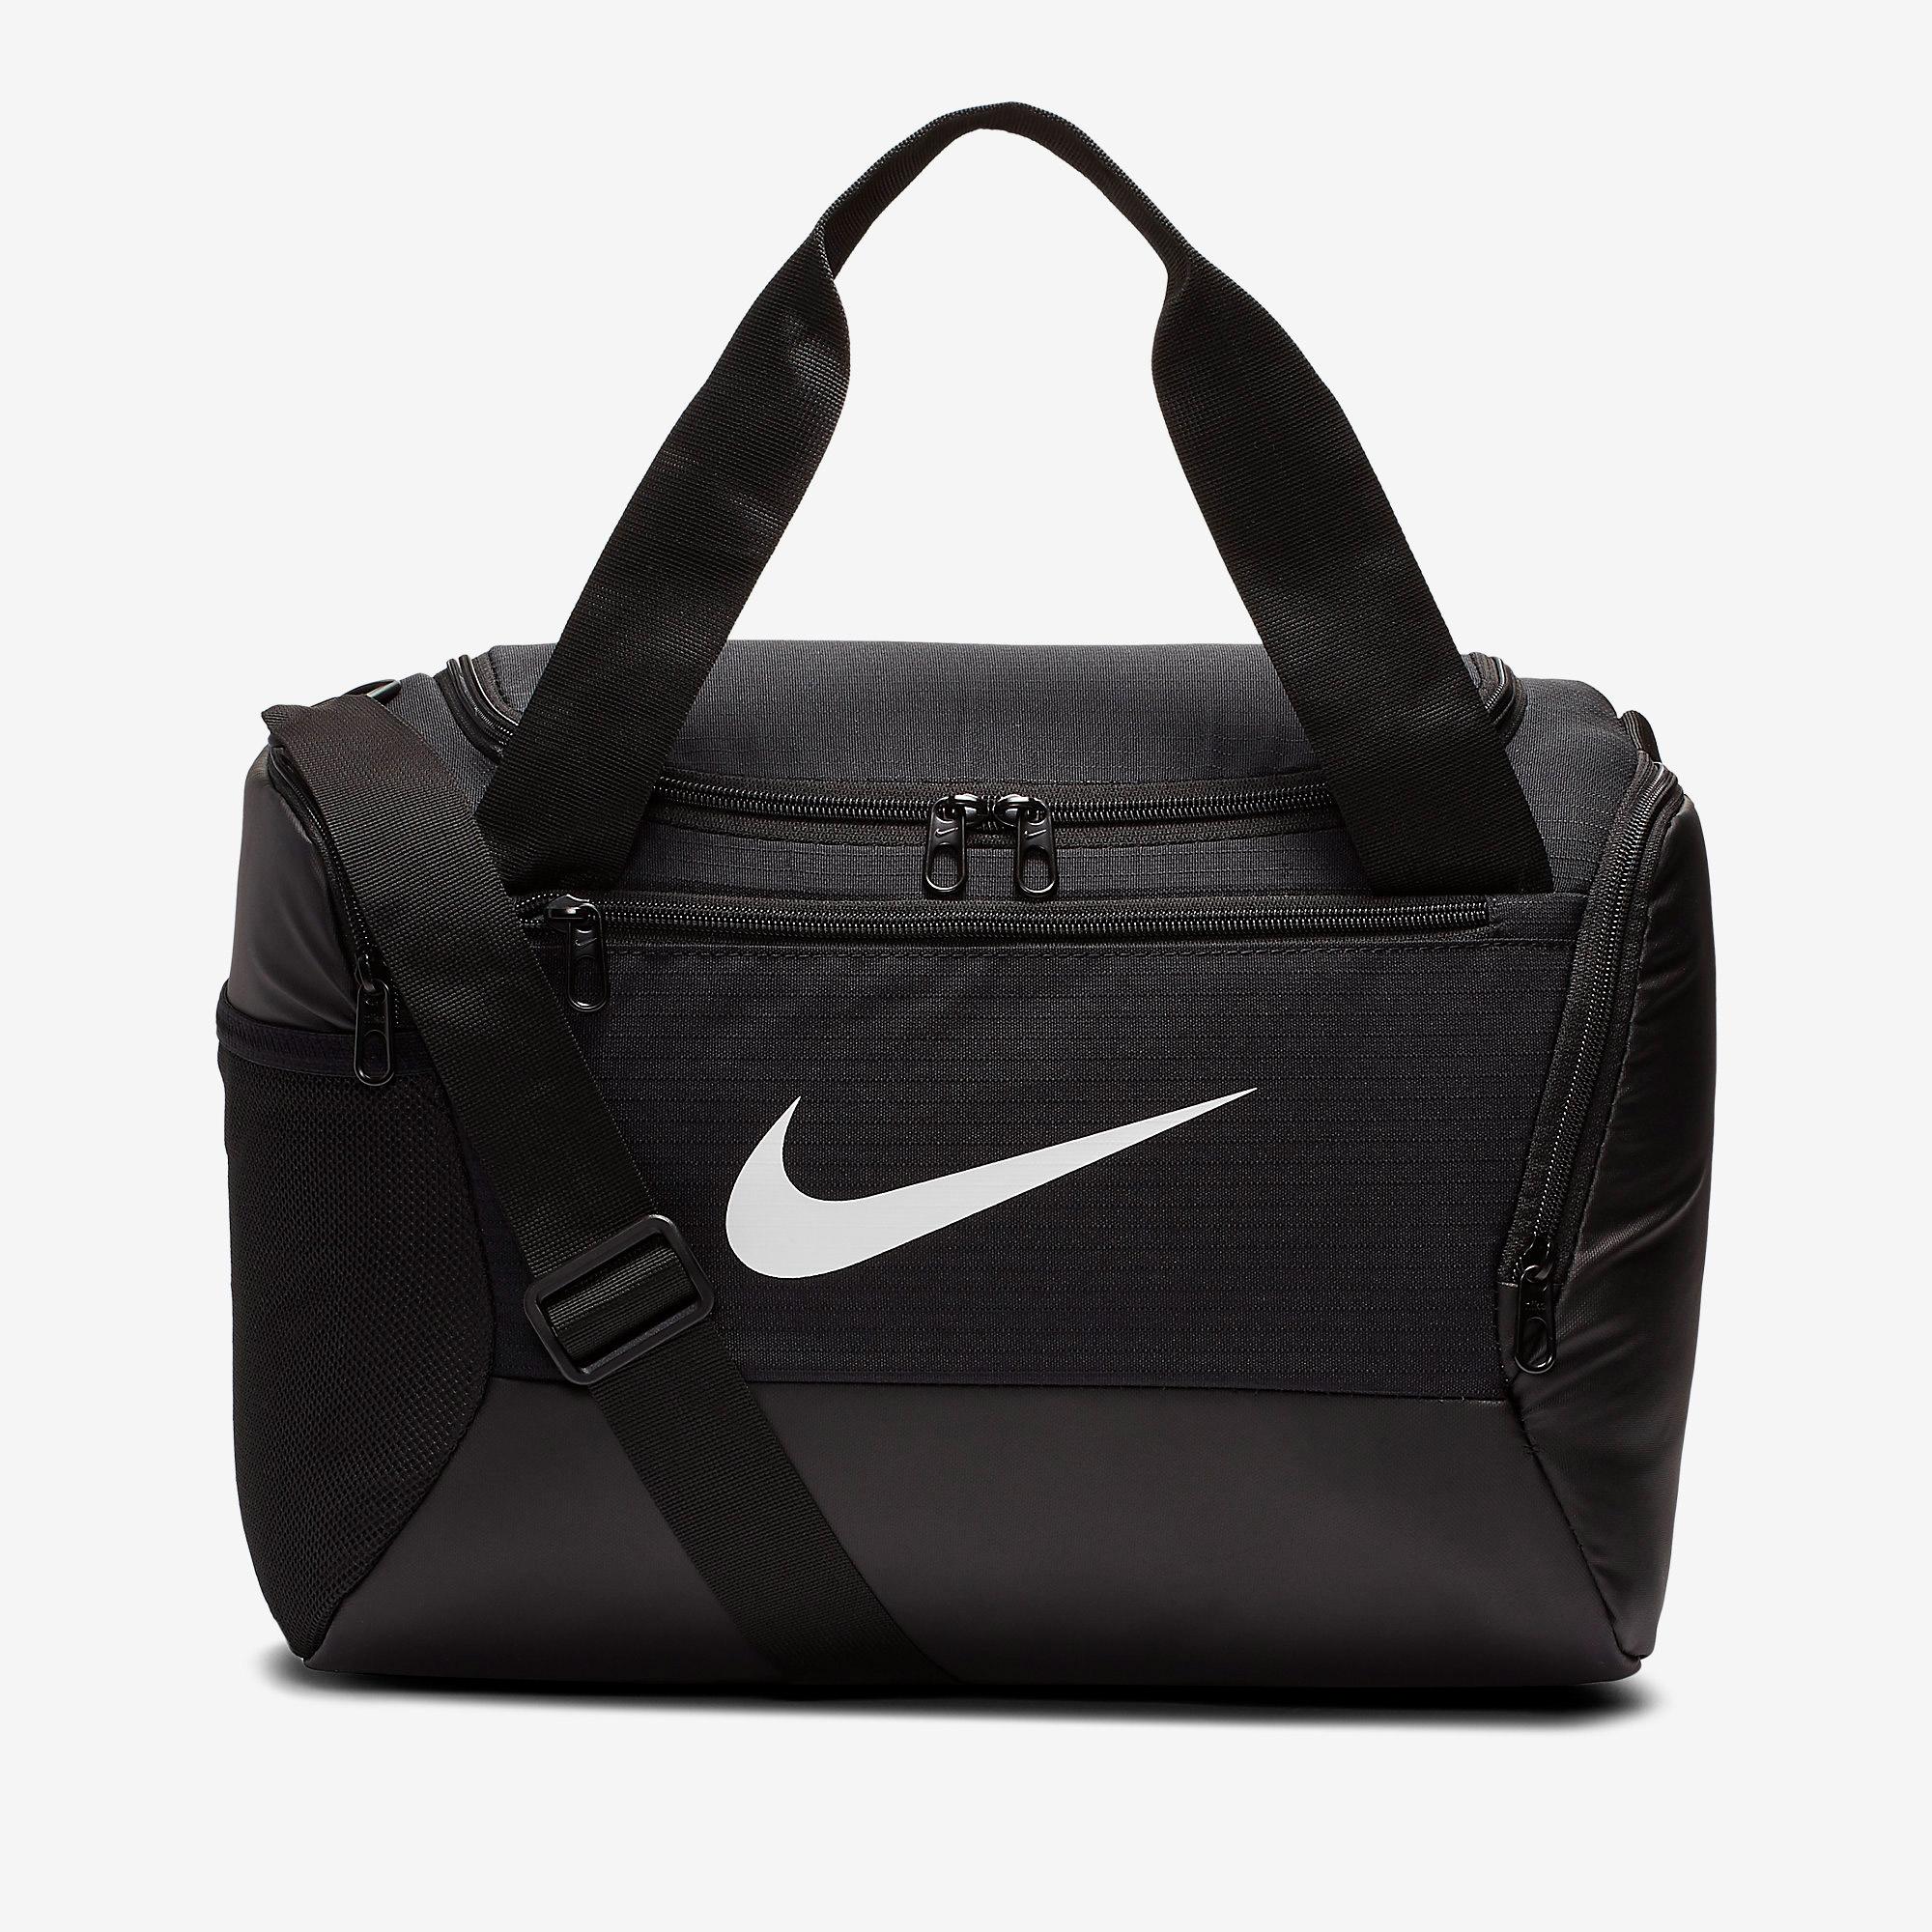 Nike Extra Small Duffel Bag - Black - Tennisnuts.com